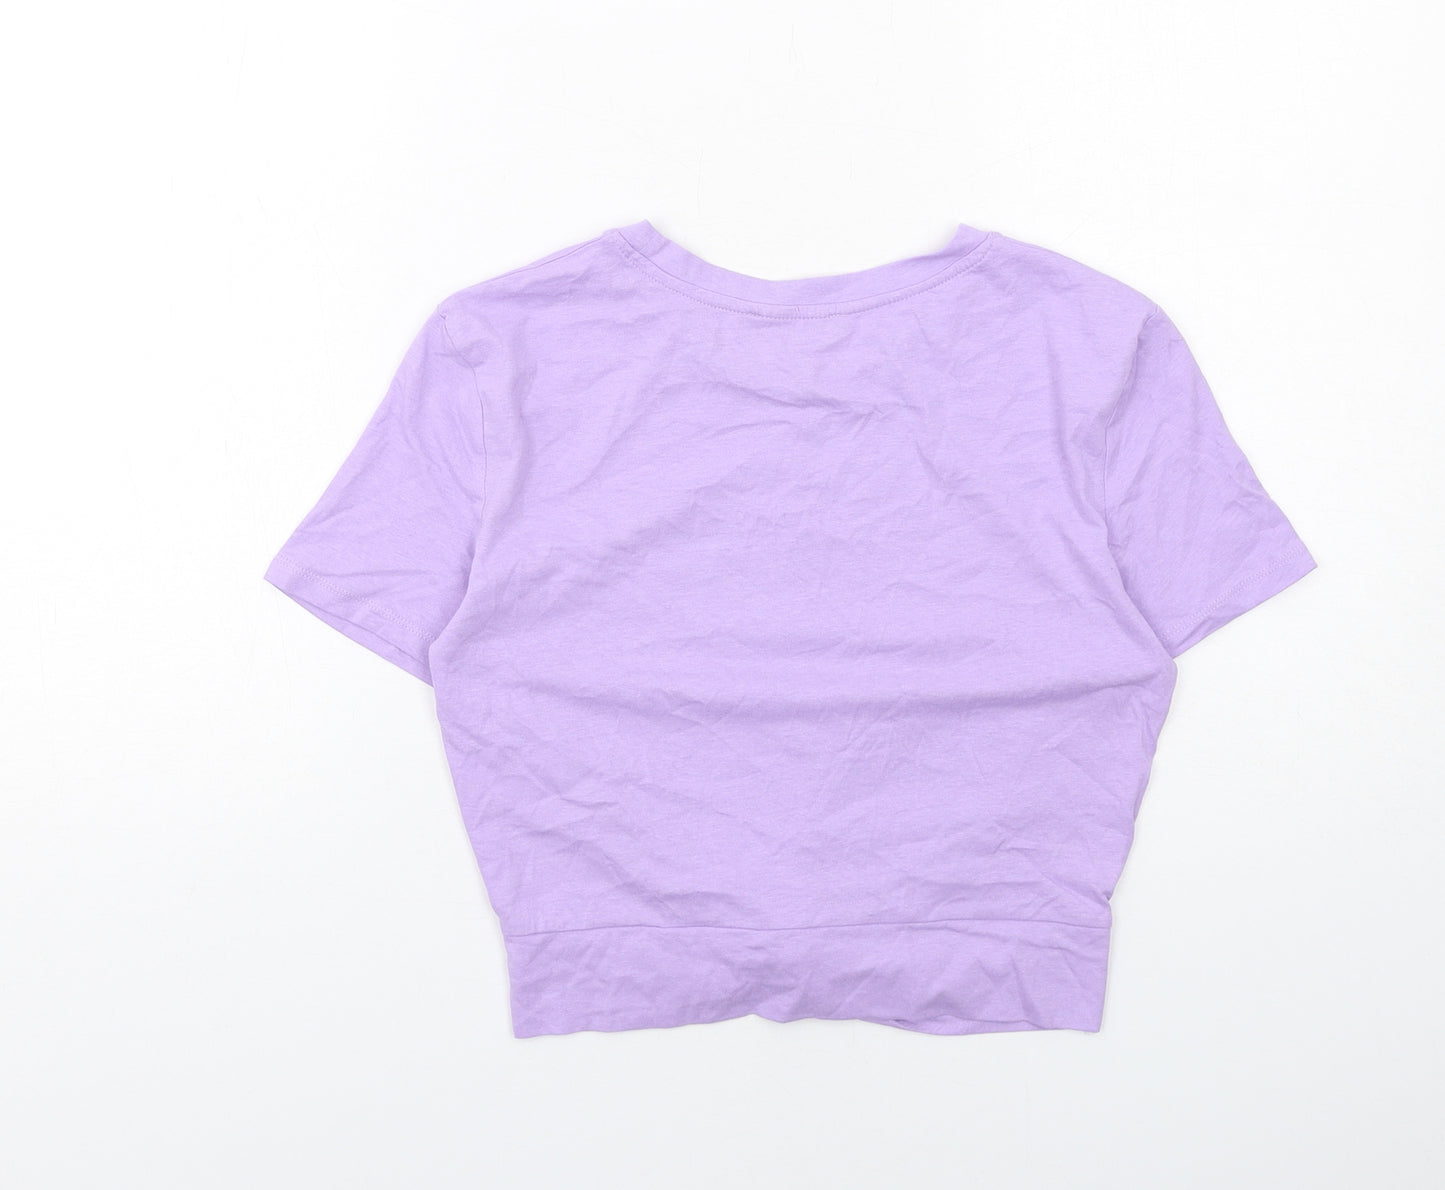 Zara Womens Purple Cotton Cropped T-Shirt Size M Crew Neck - Twist Front Detail